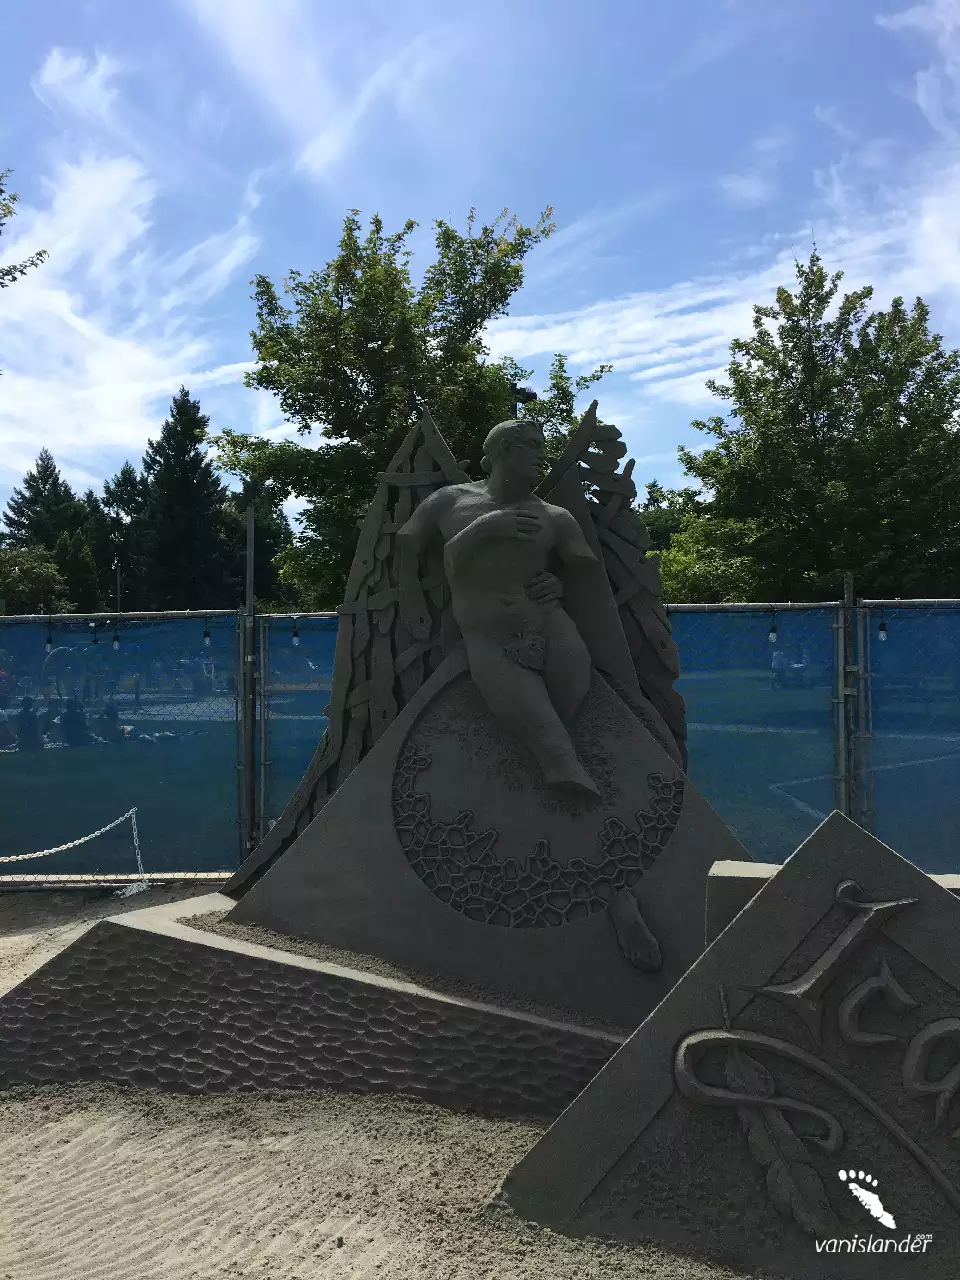 Sand Sculpture of A Man - Parksville Festival, Vancouver Island